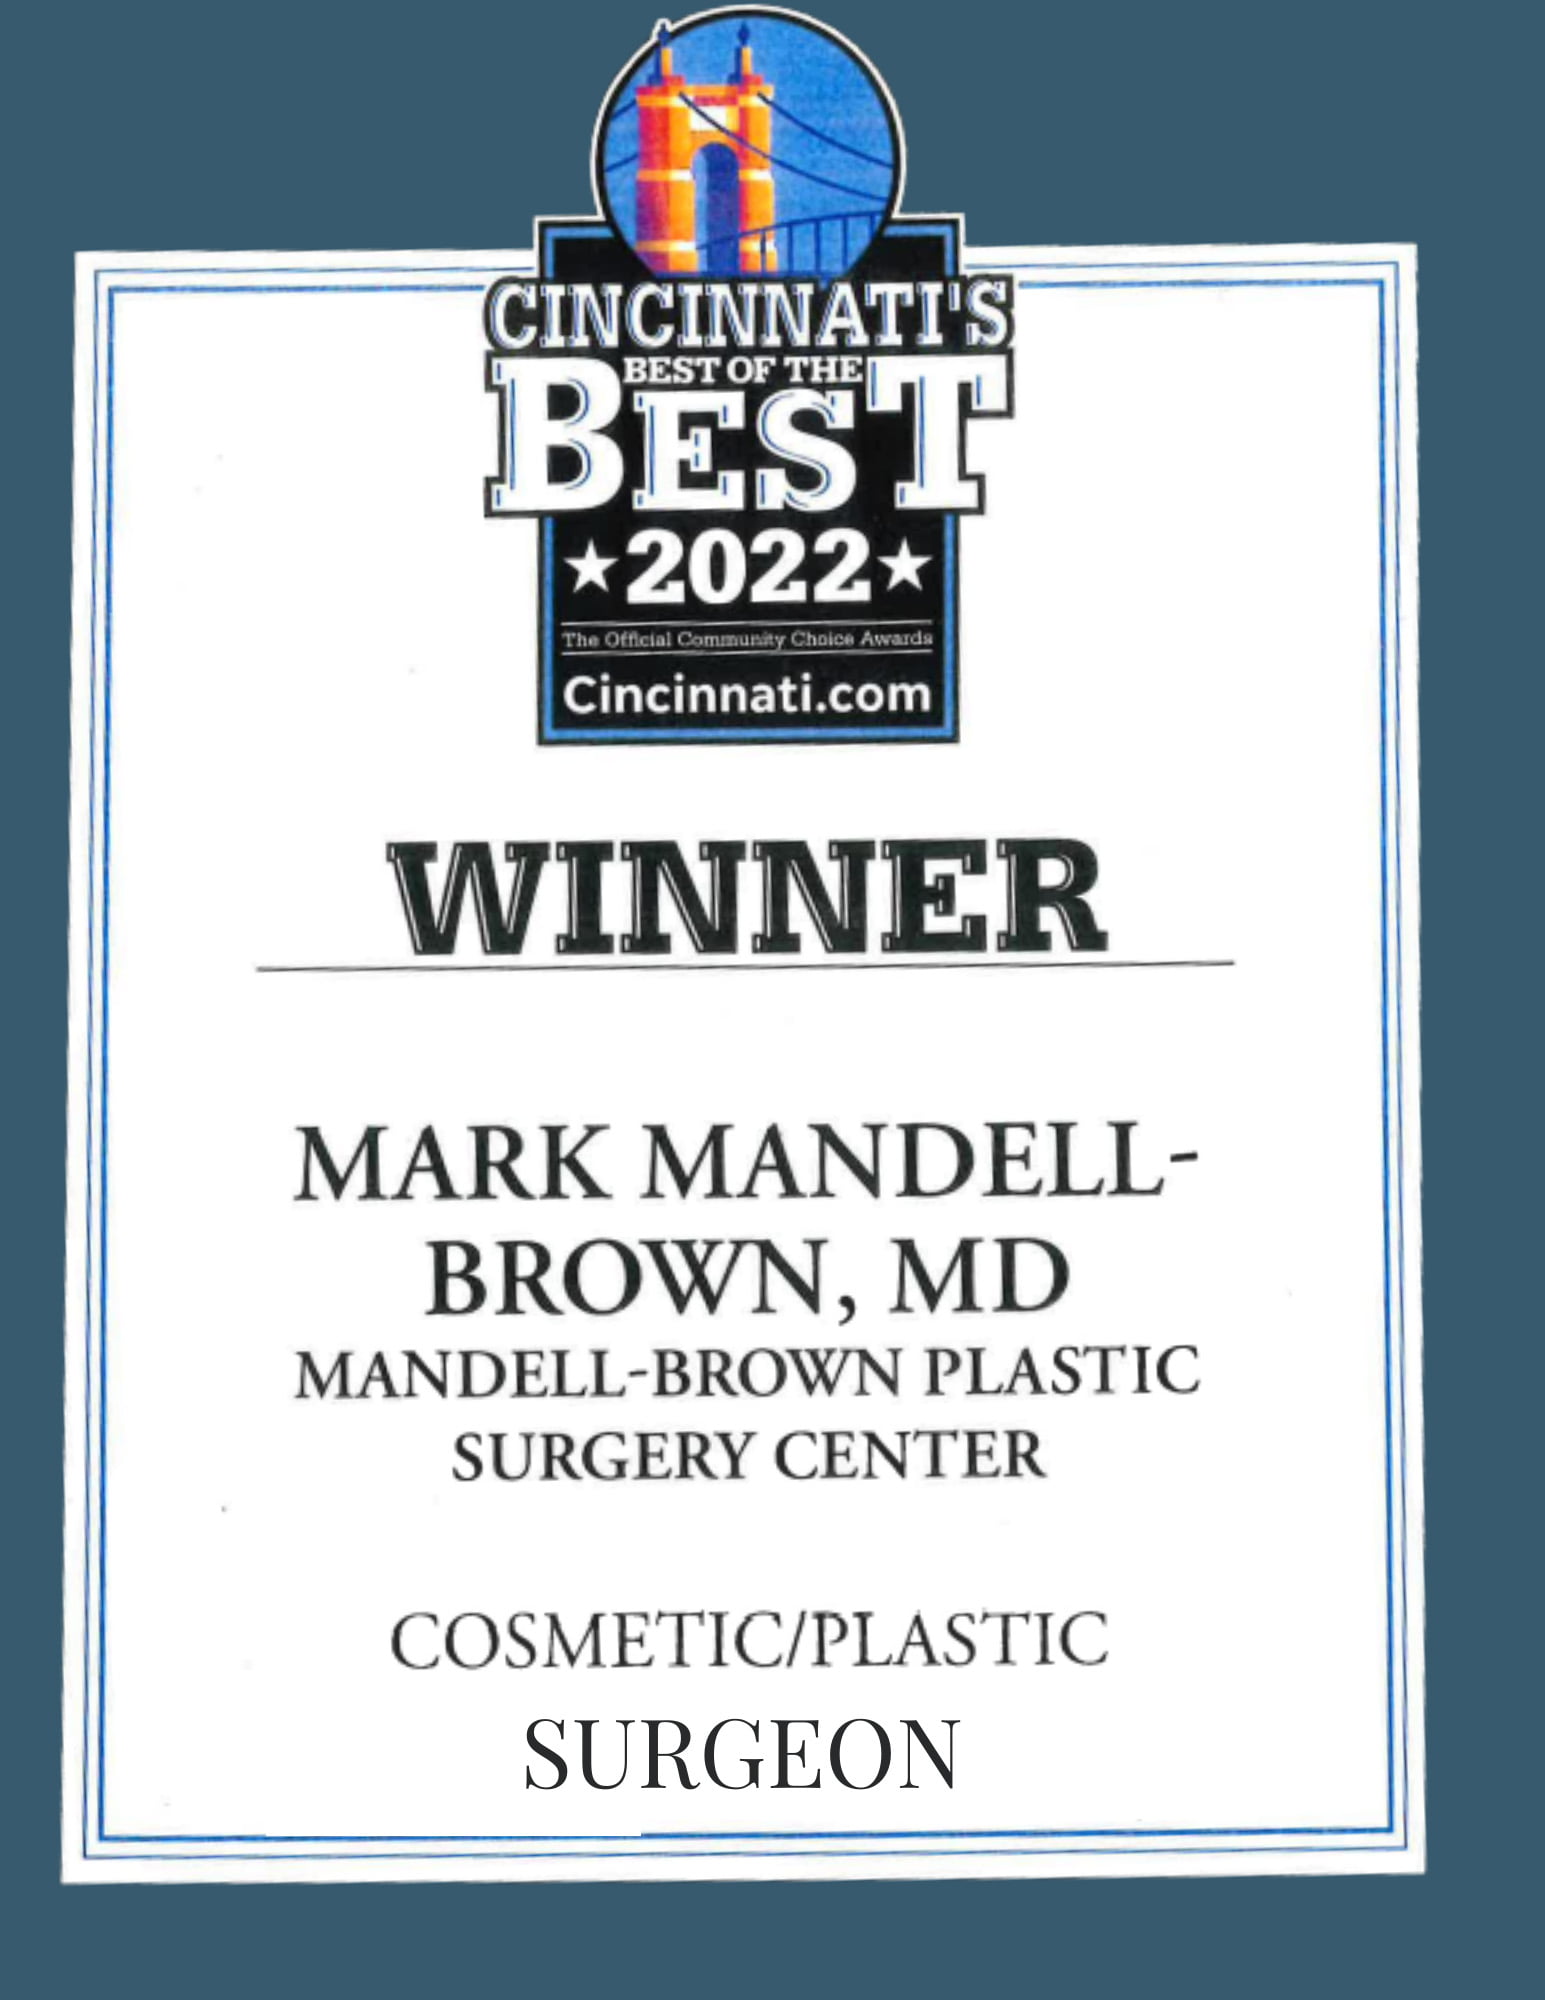 Cincinnati's Best of the Best 2022 Award for Cosmetic/Plastic Surgeon